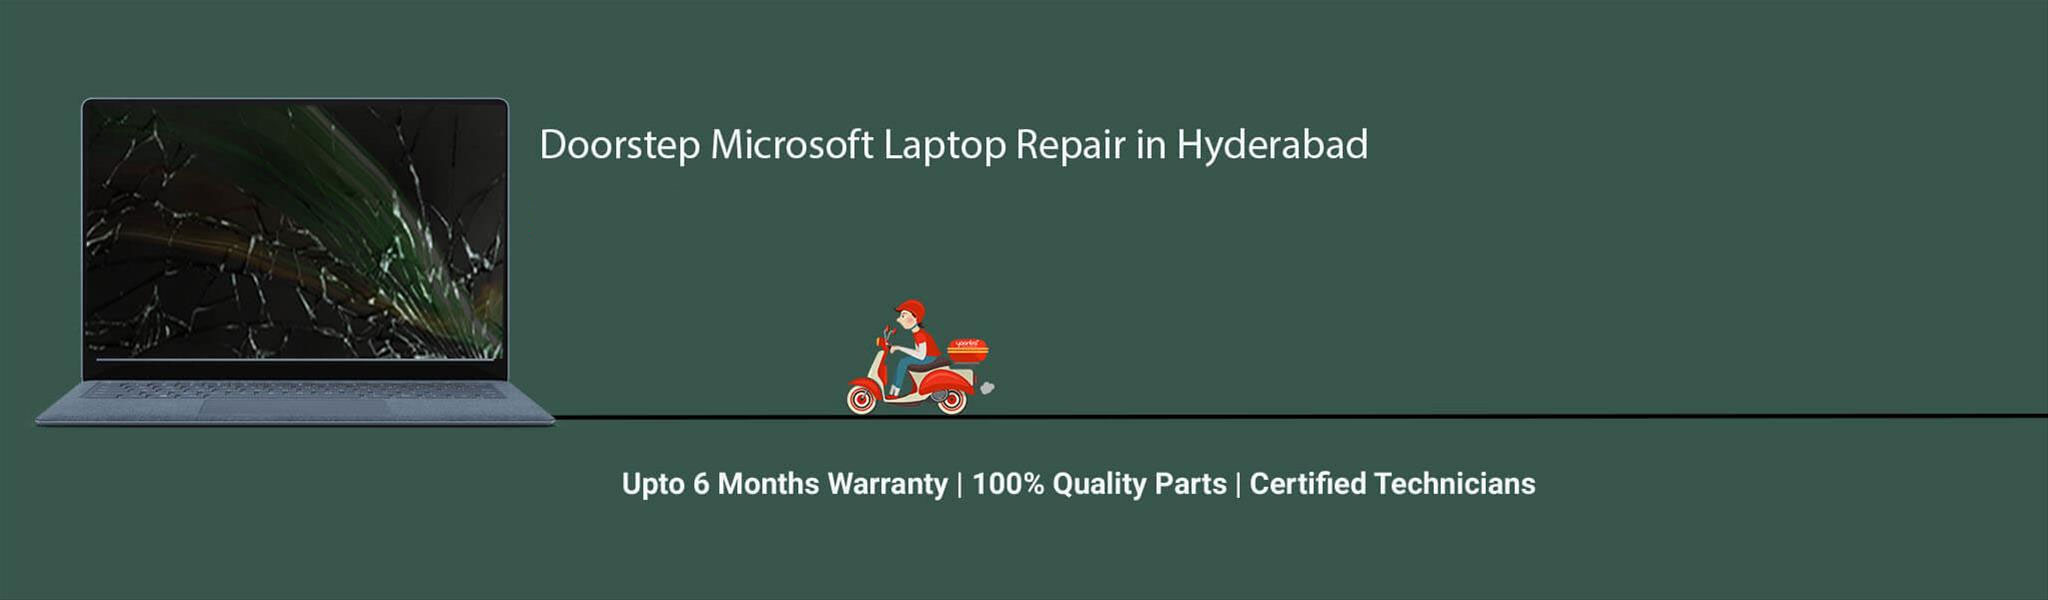 Microsoft-laptop-banner-hyderabad.jpg